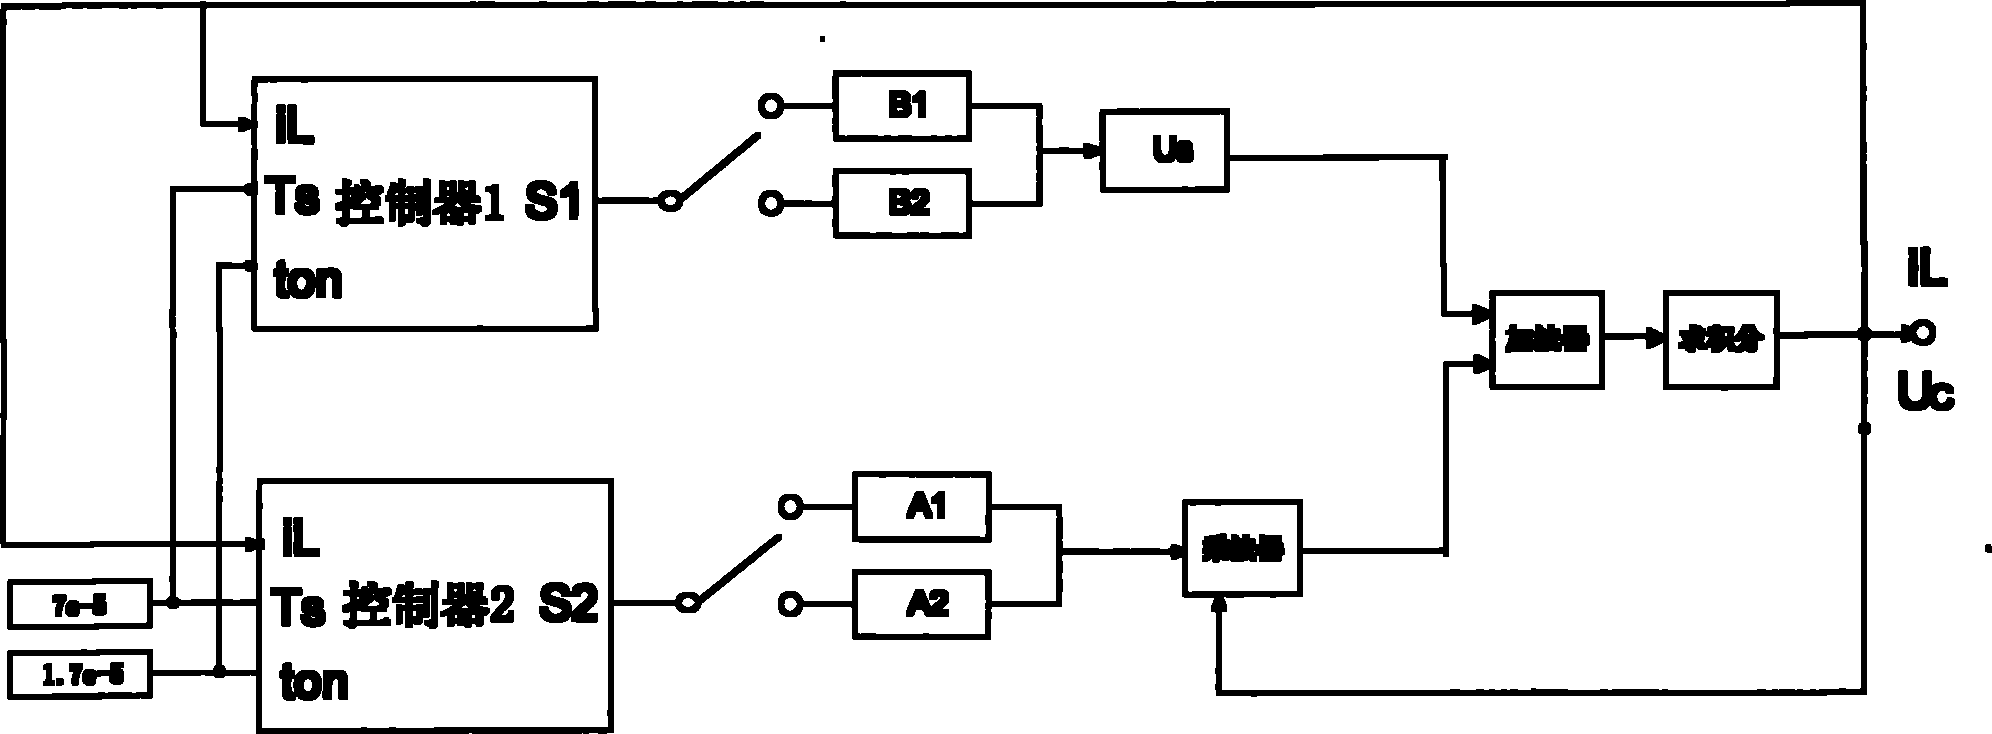 Hybrid switching system theory-based Buck circuit modeling method